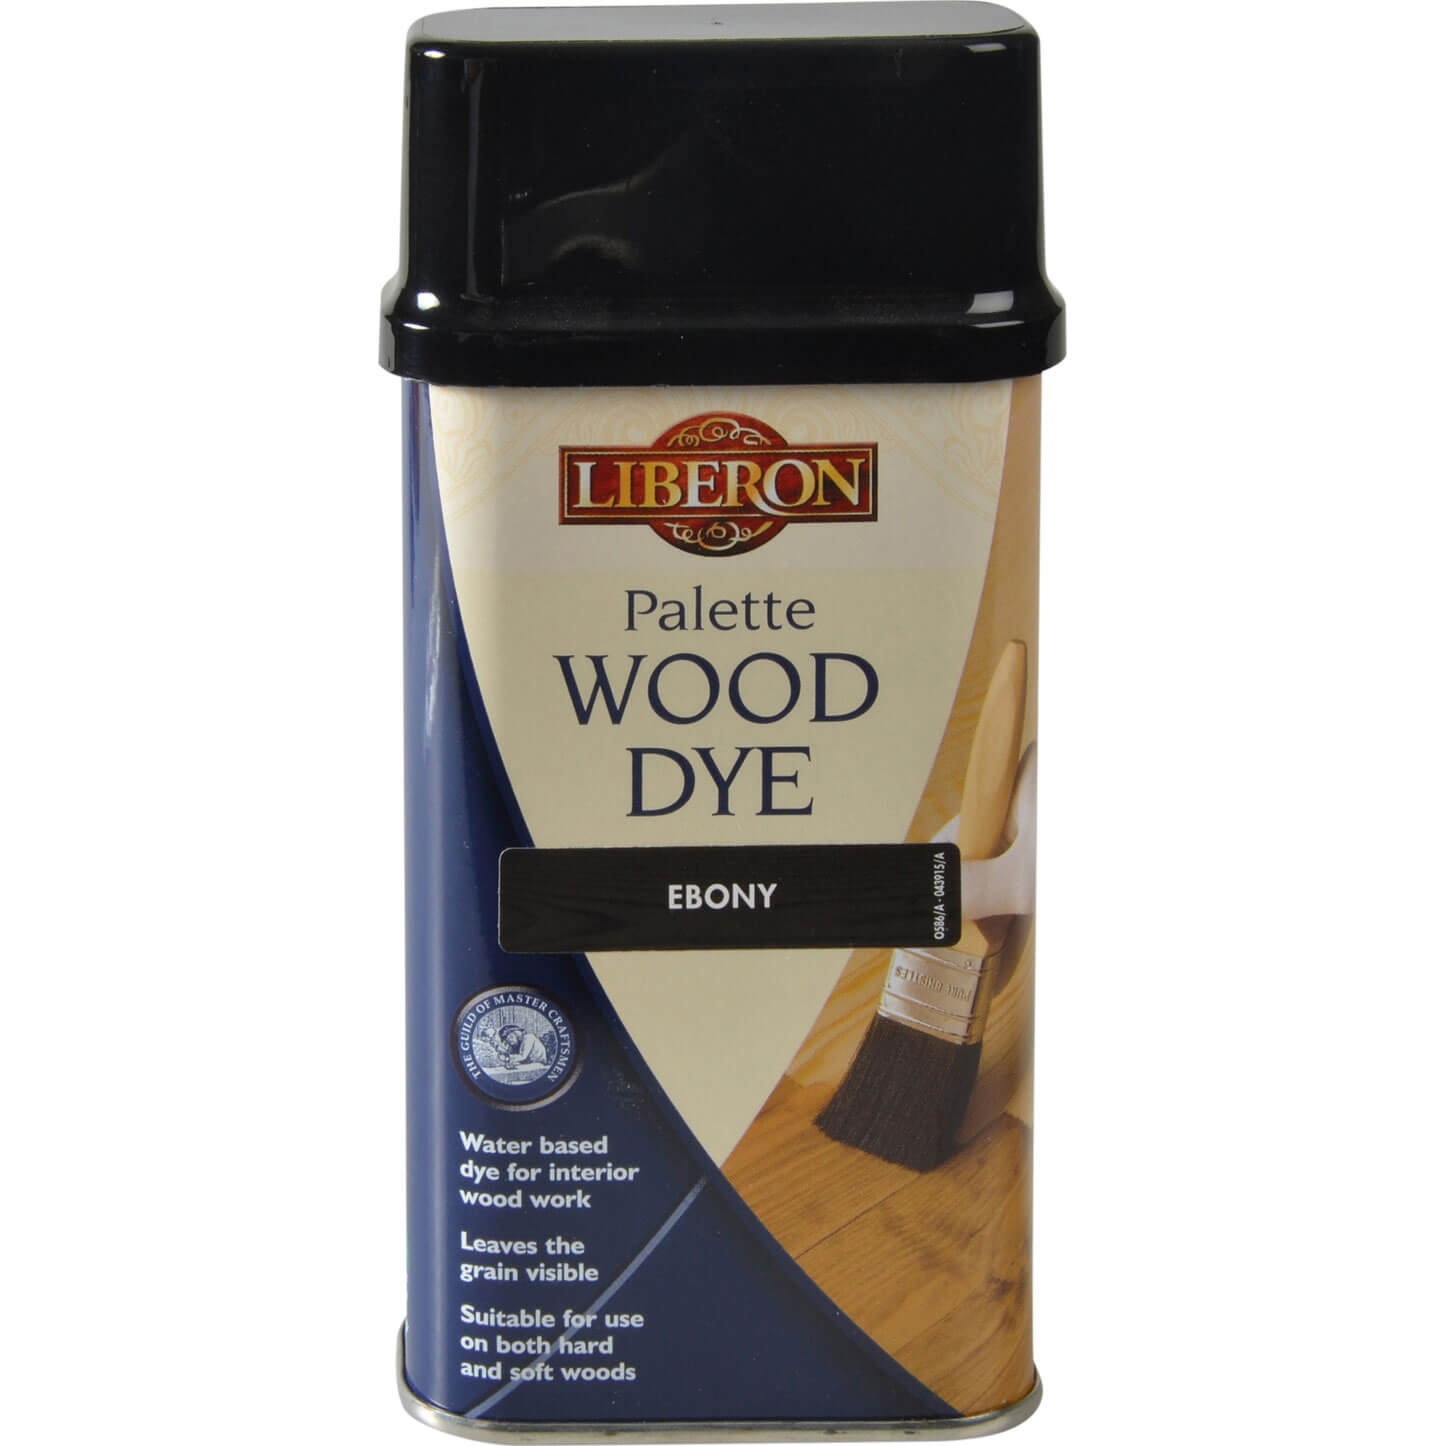 Image of Liberon Palette Wood Dye Ebony 250ml